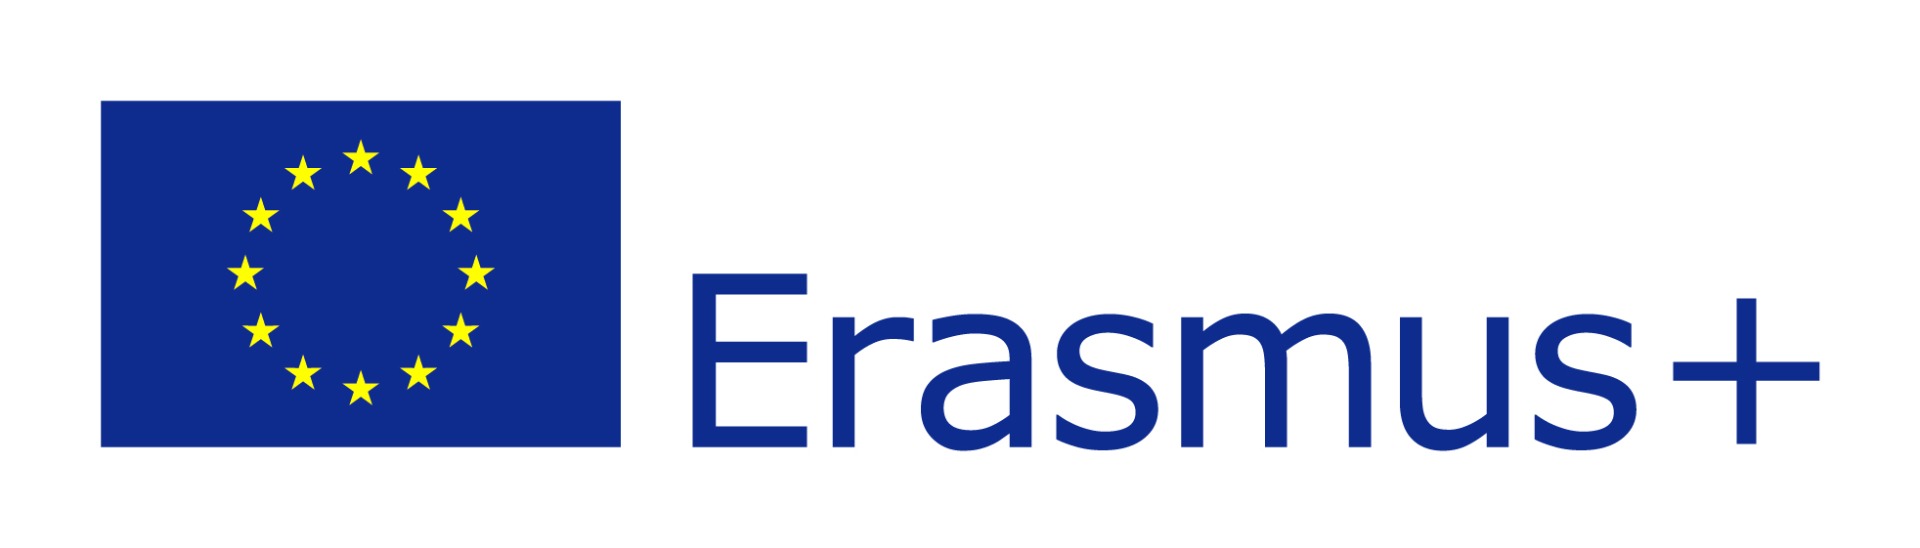 Nabór do projektu Erasmus+ - Obrazek 1